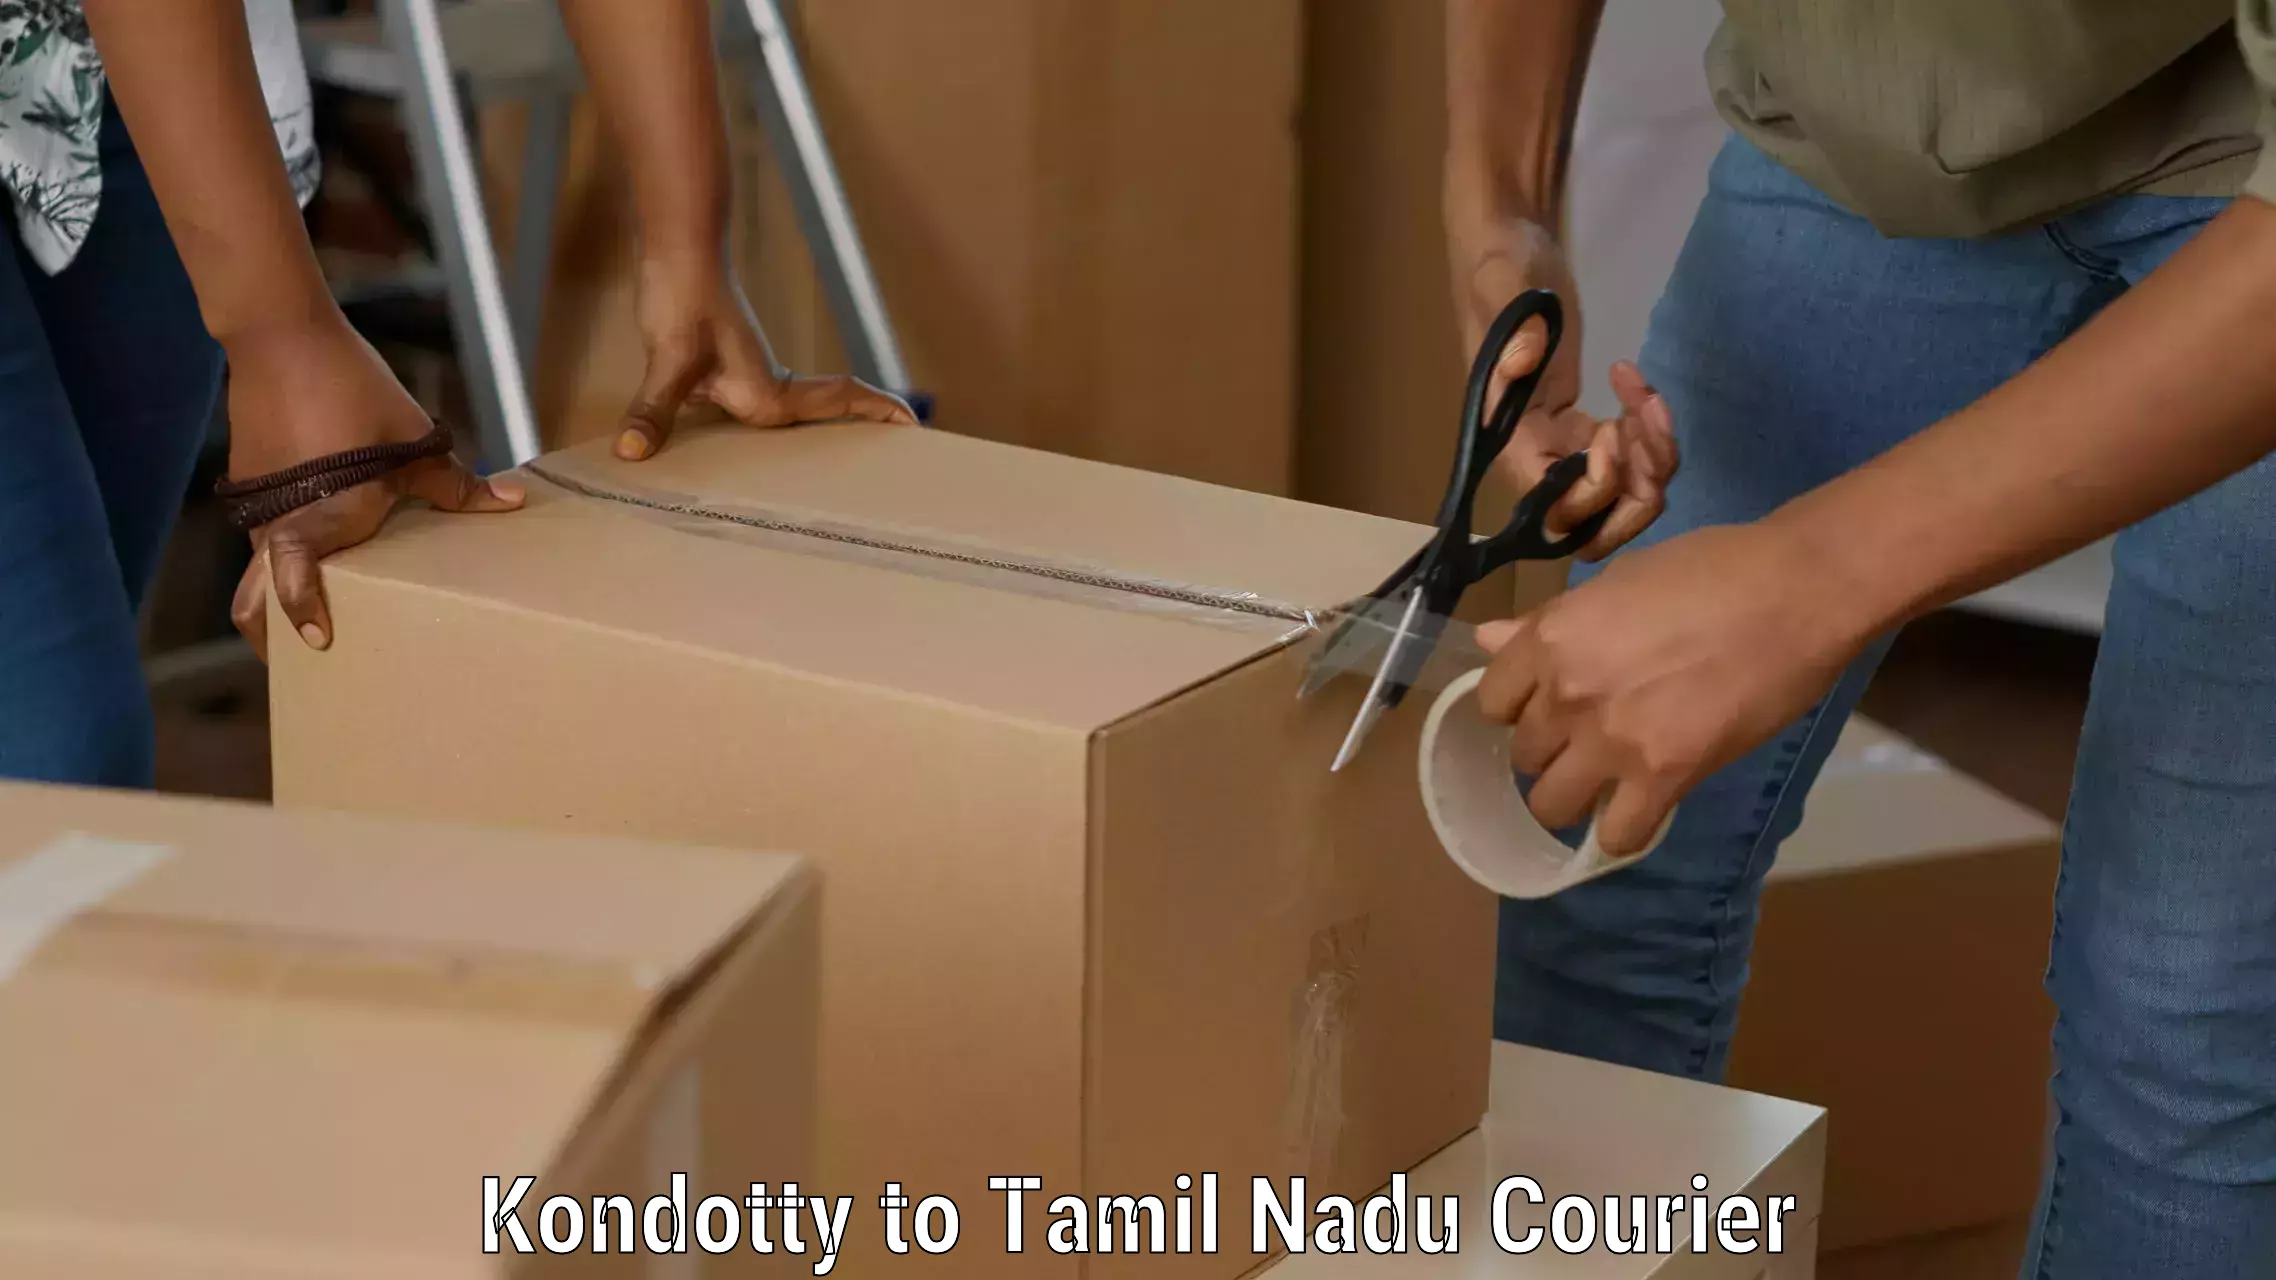 Professional courier handling Kondotty to Chennai Port